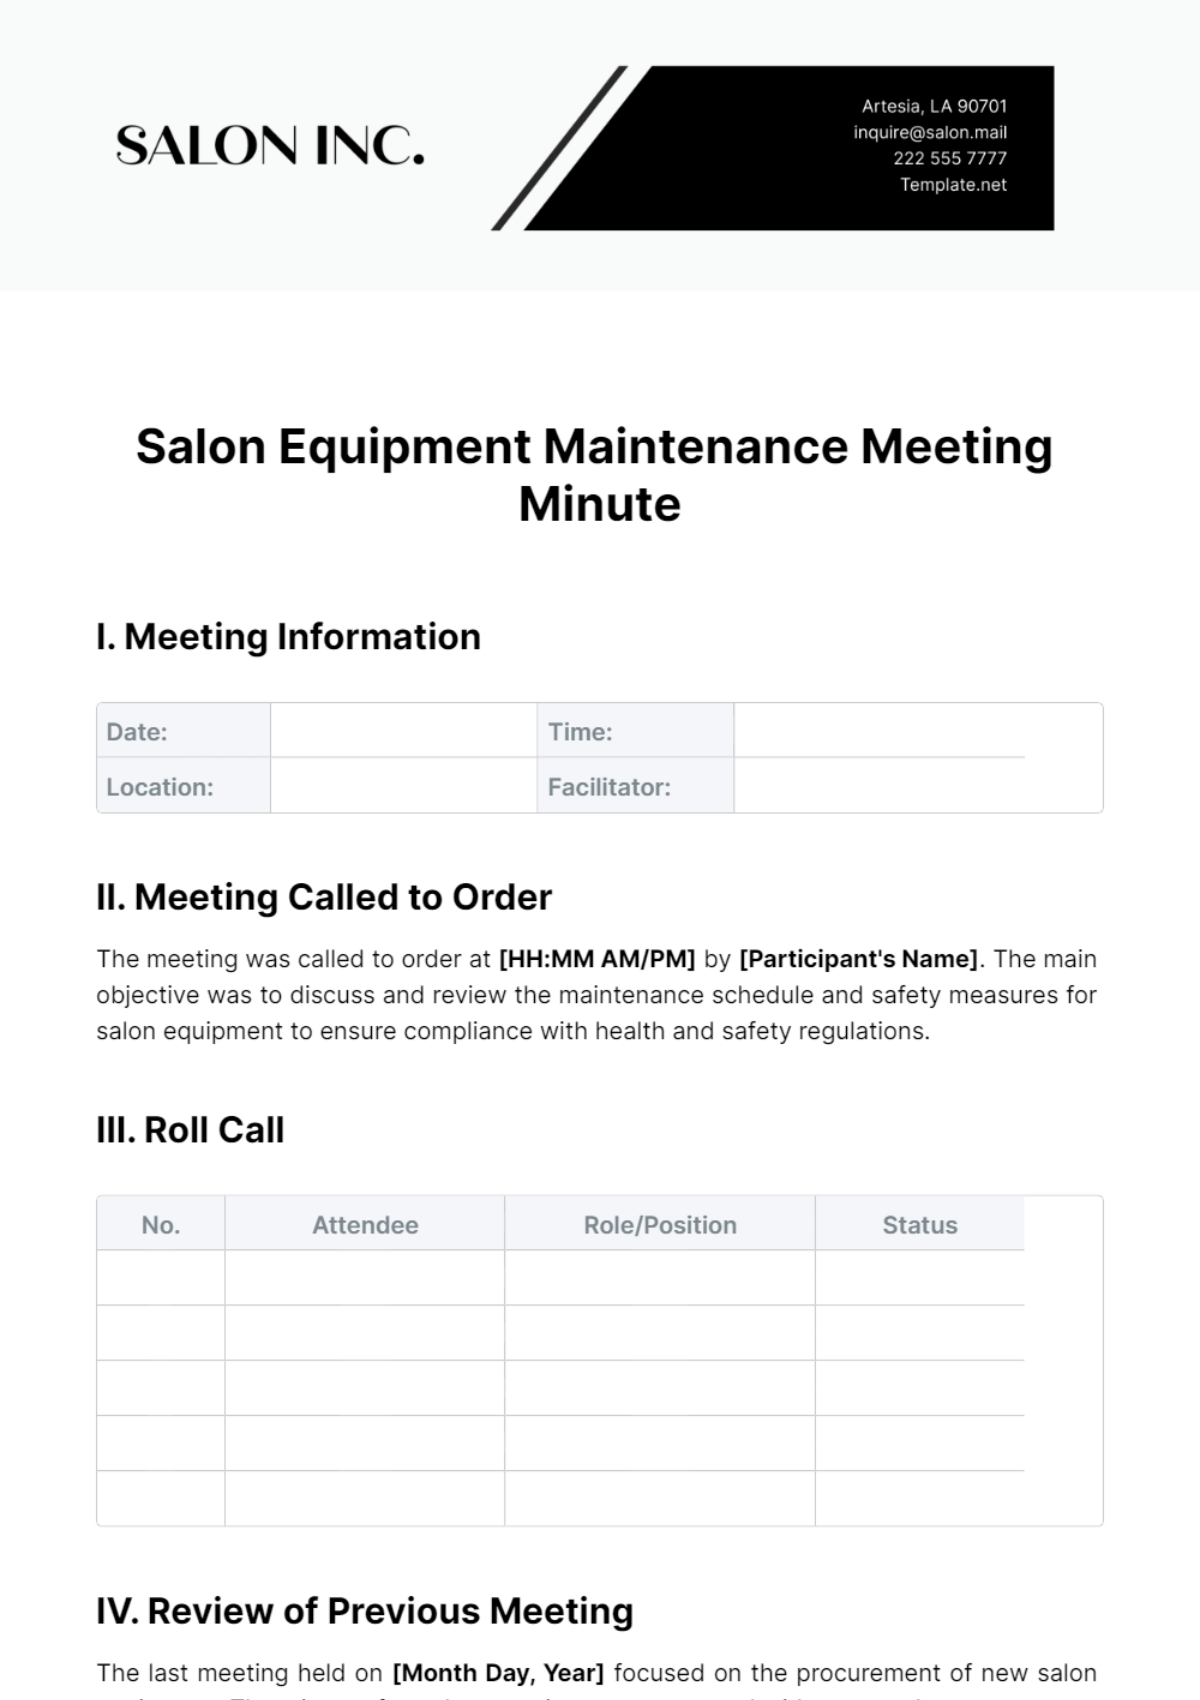 Free Salon Equipment Maintenance Meeting Minute Template